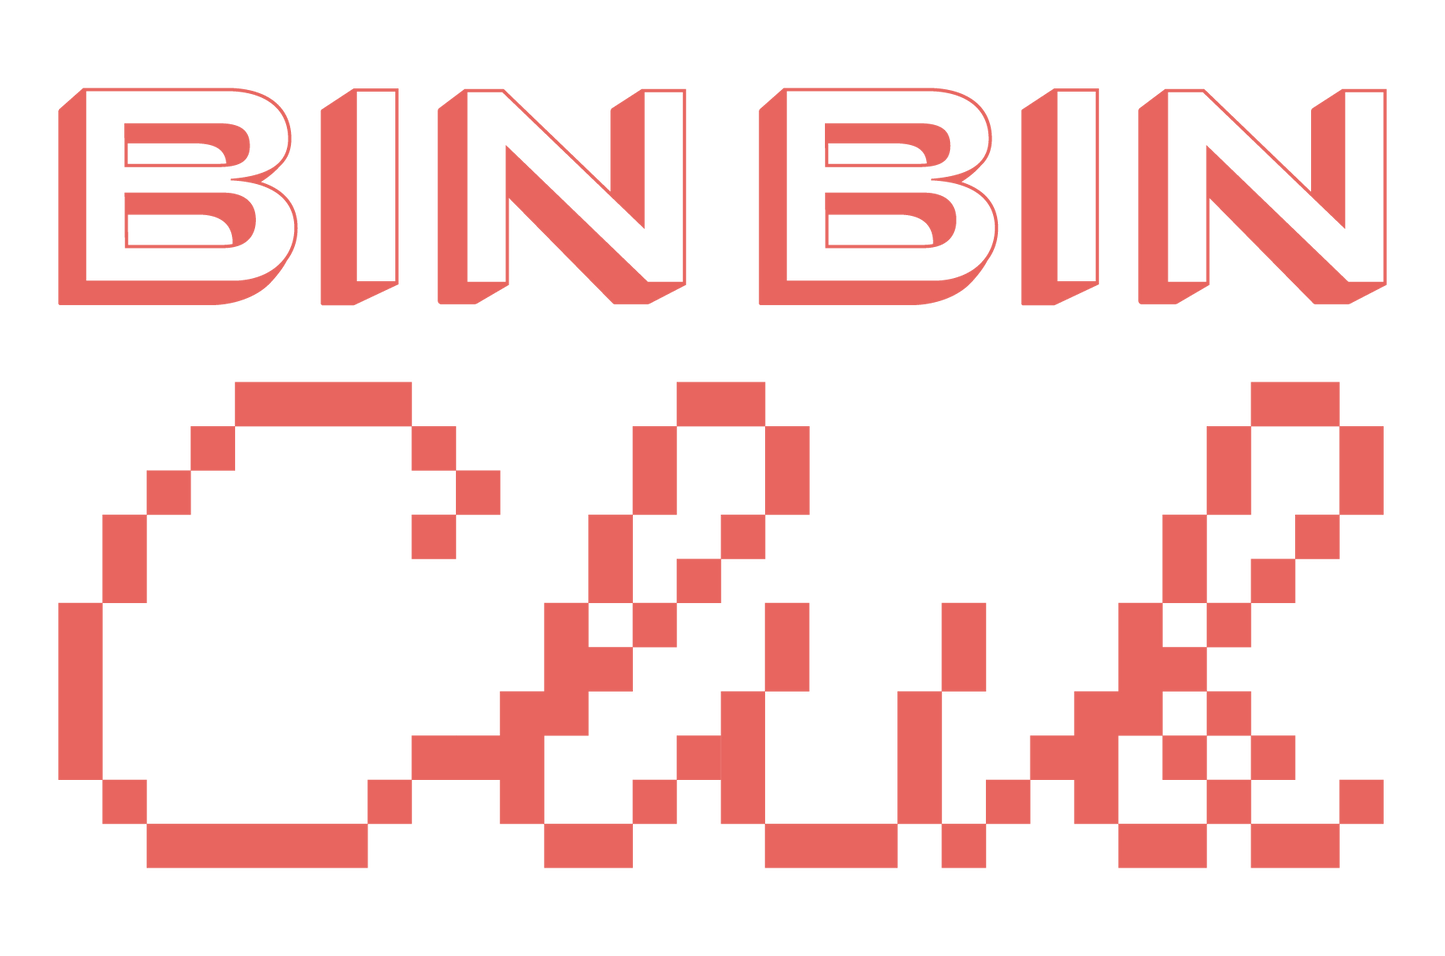 bin bin sake club logo